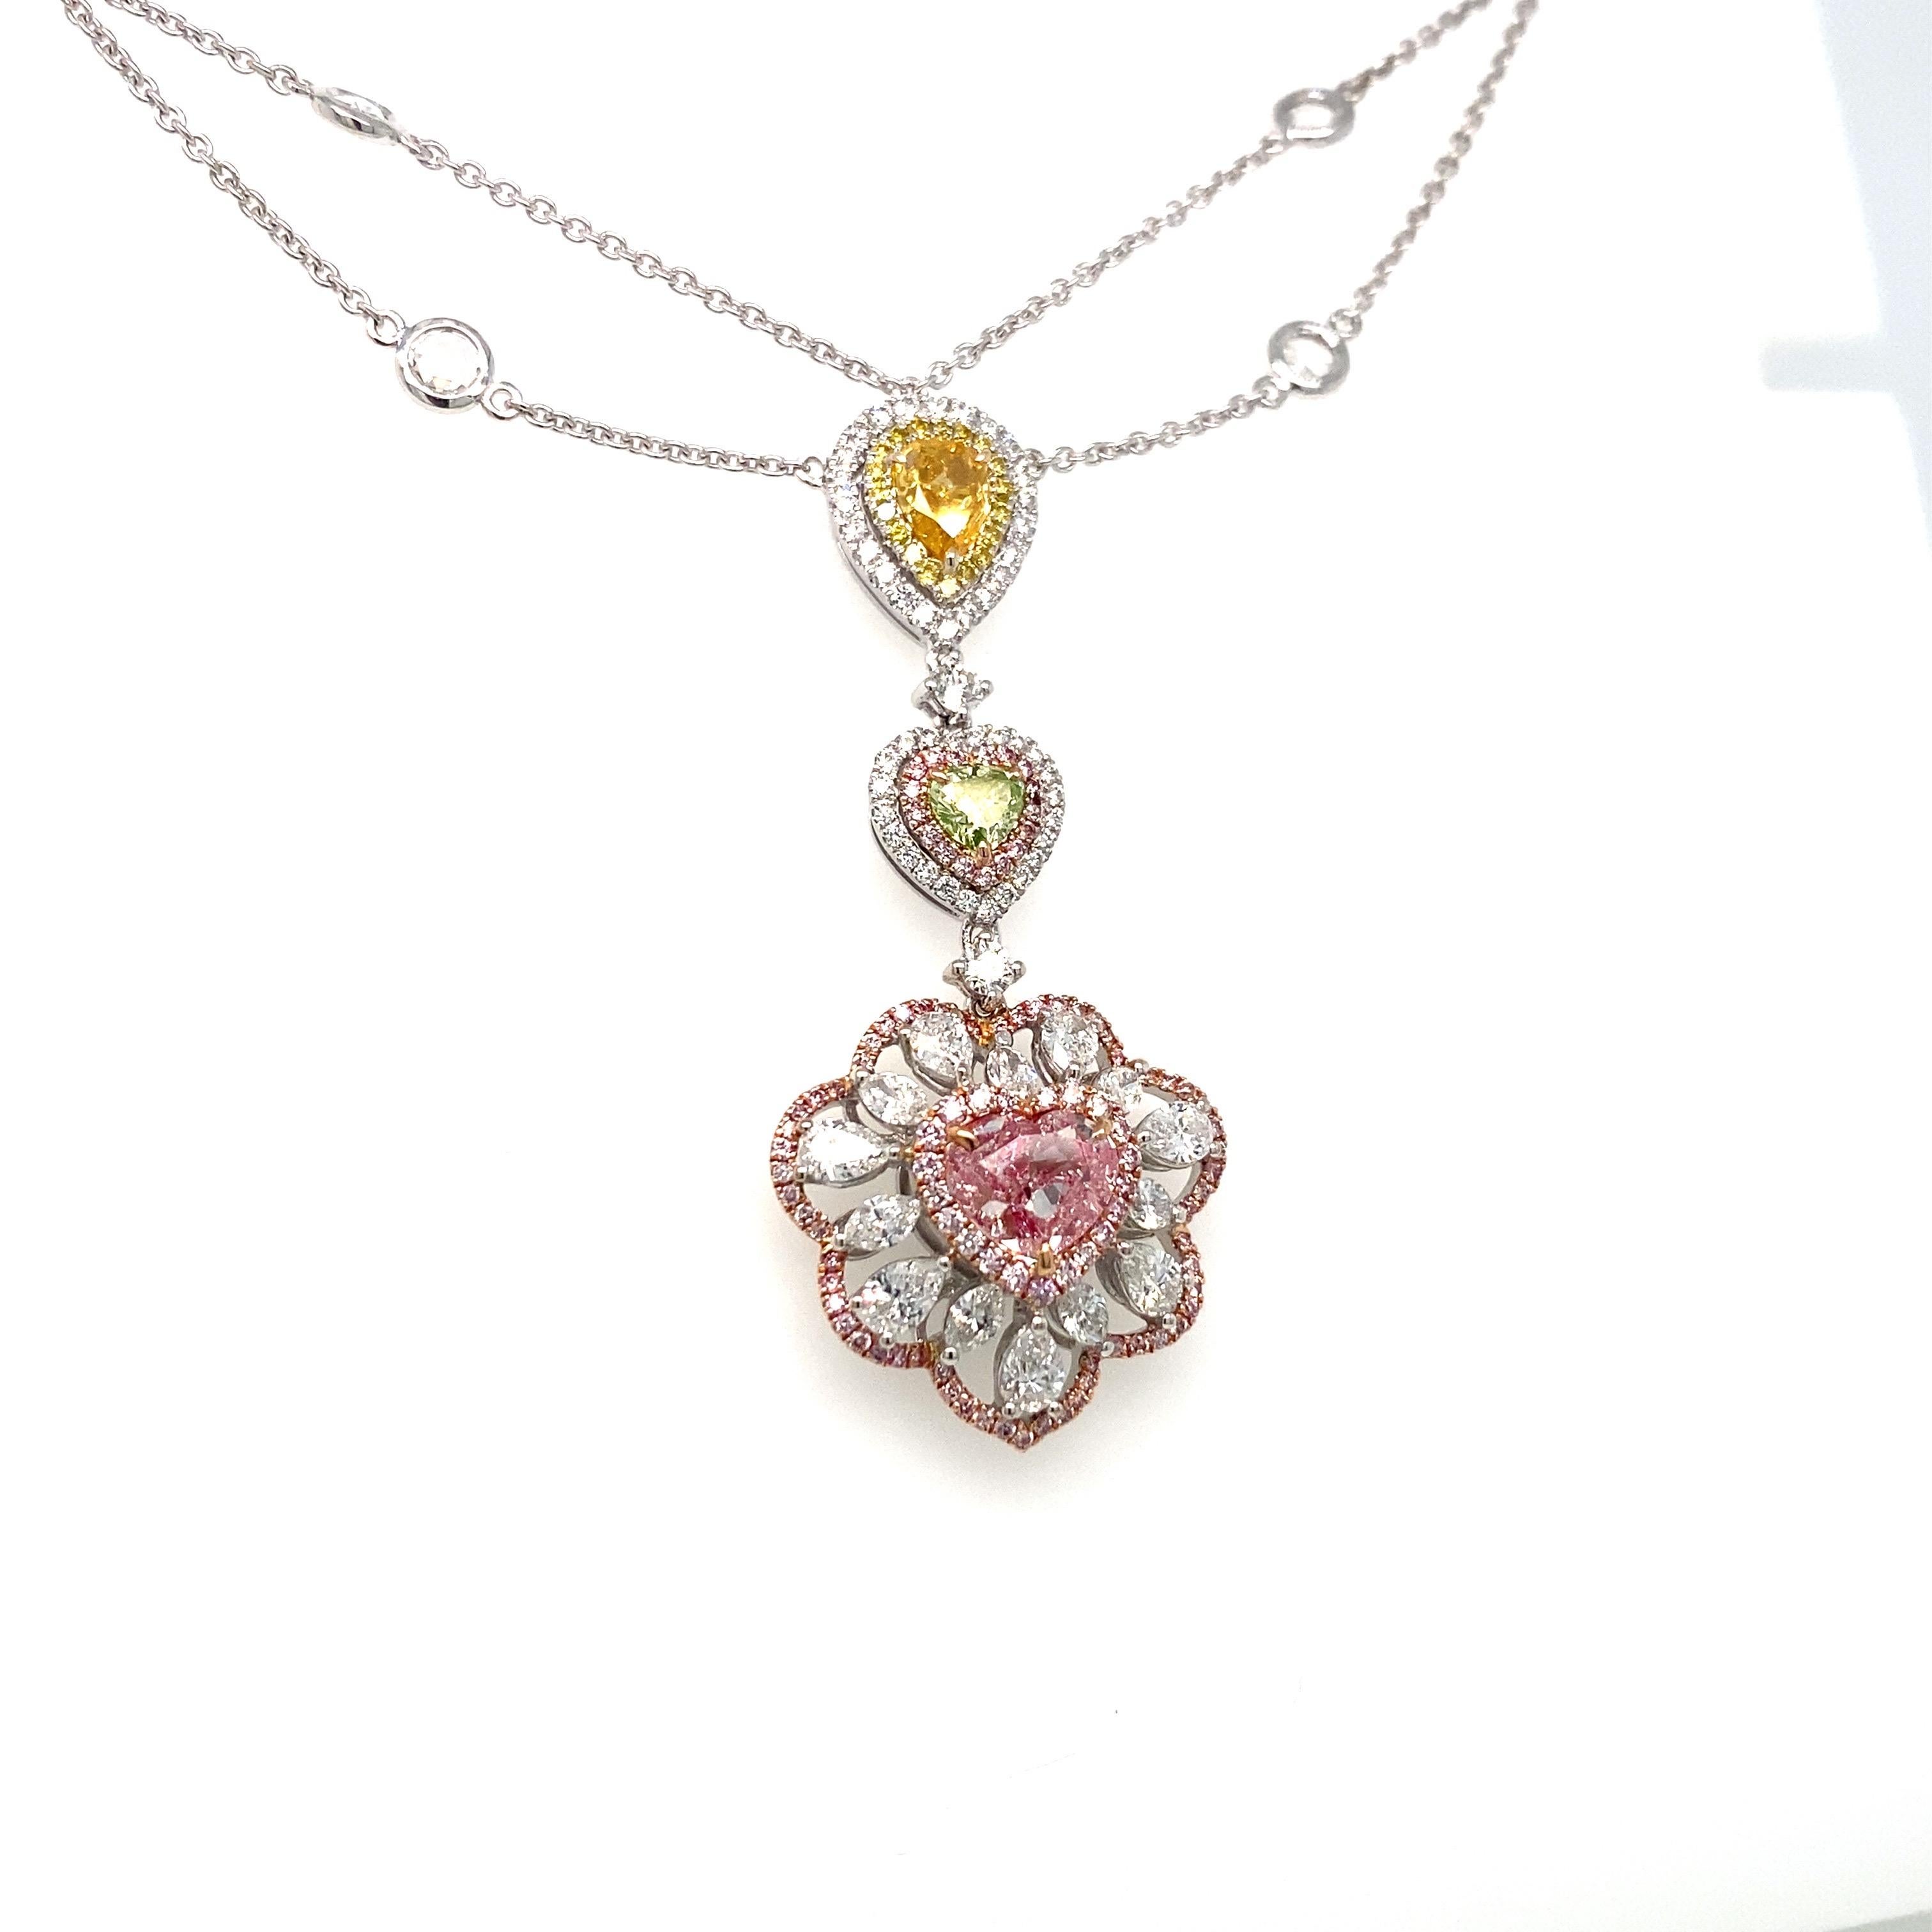 light pink diamond necklace